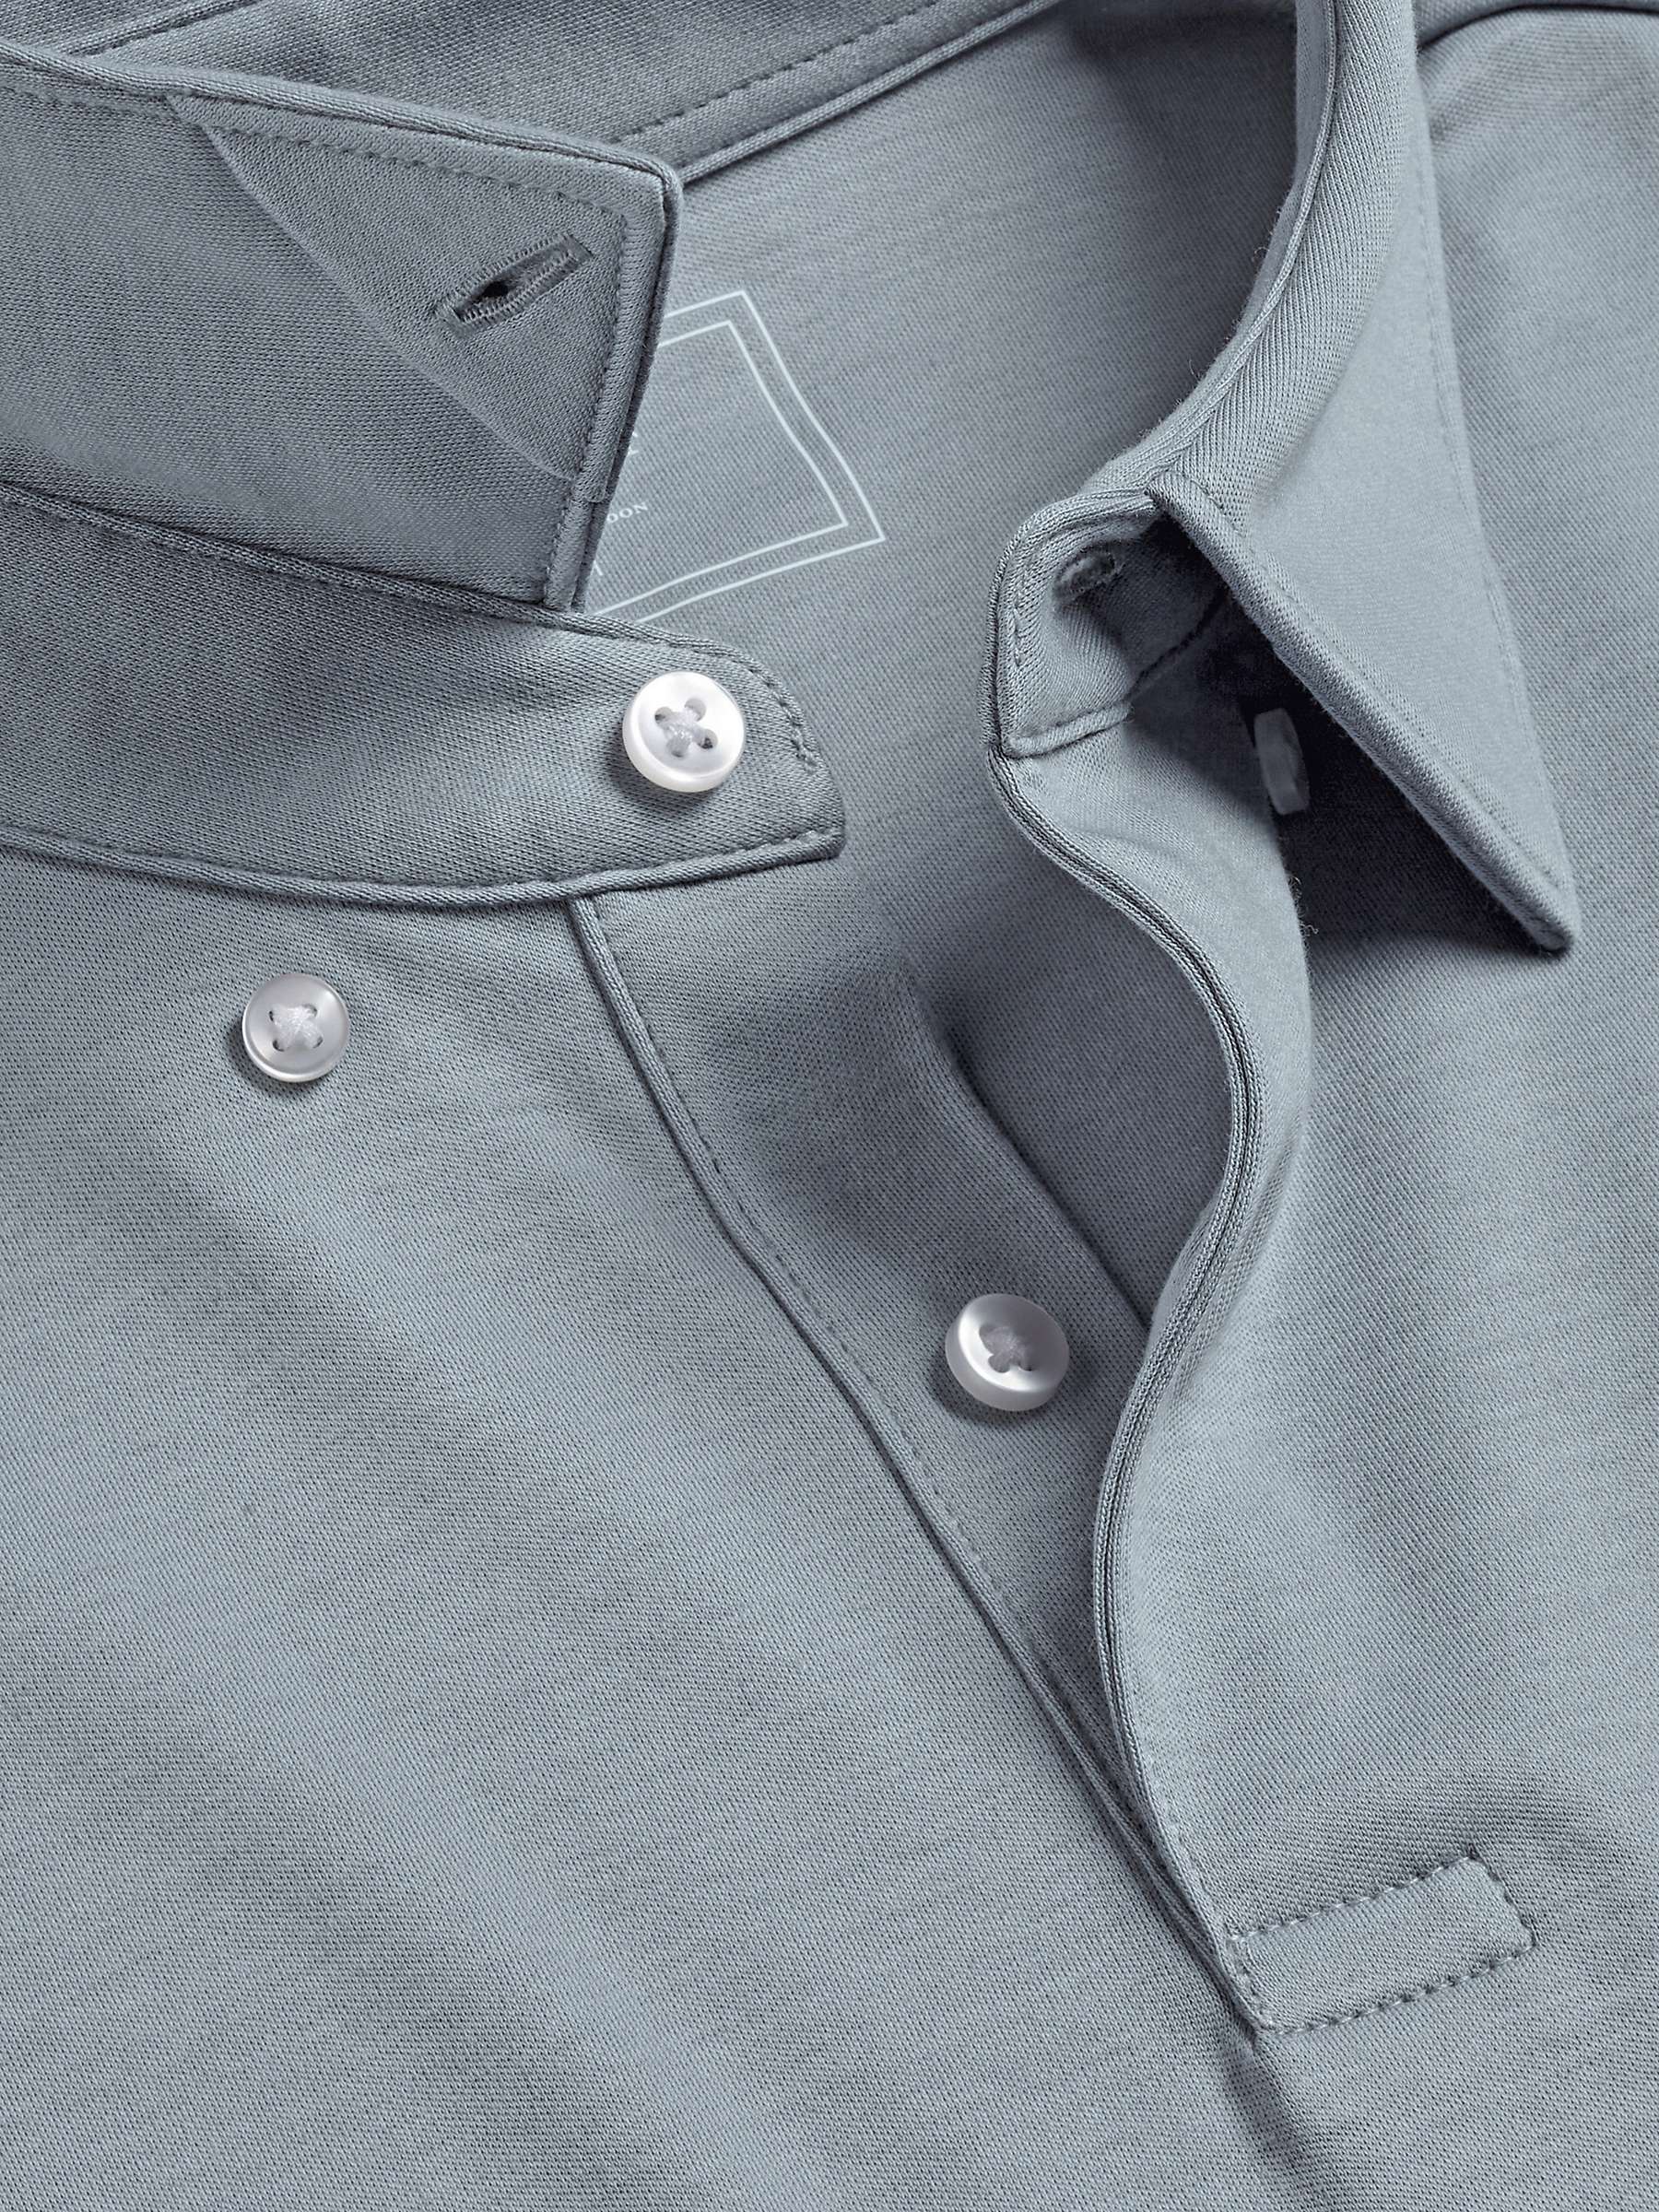 Buy Charles Tyrwhitt Smart Jersey Short Sleeve Polo Online at johnlewis.com